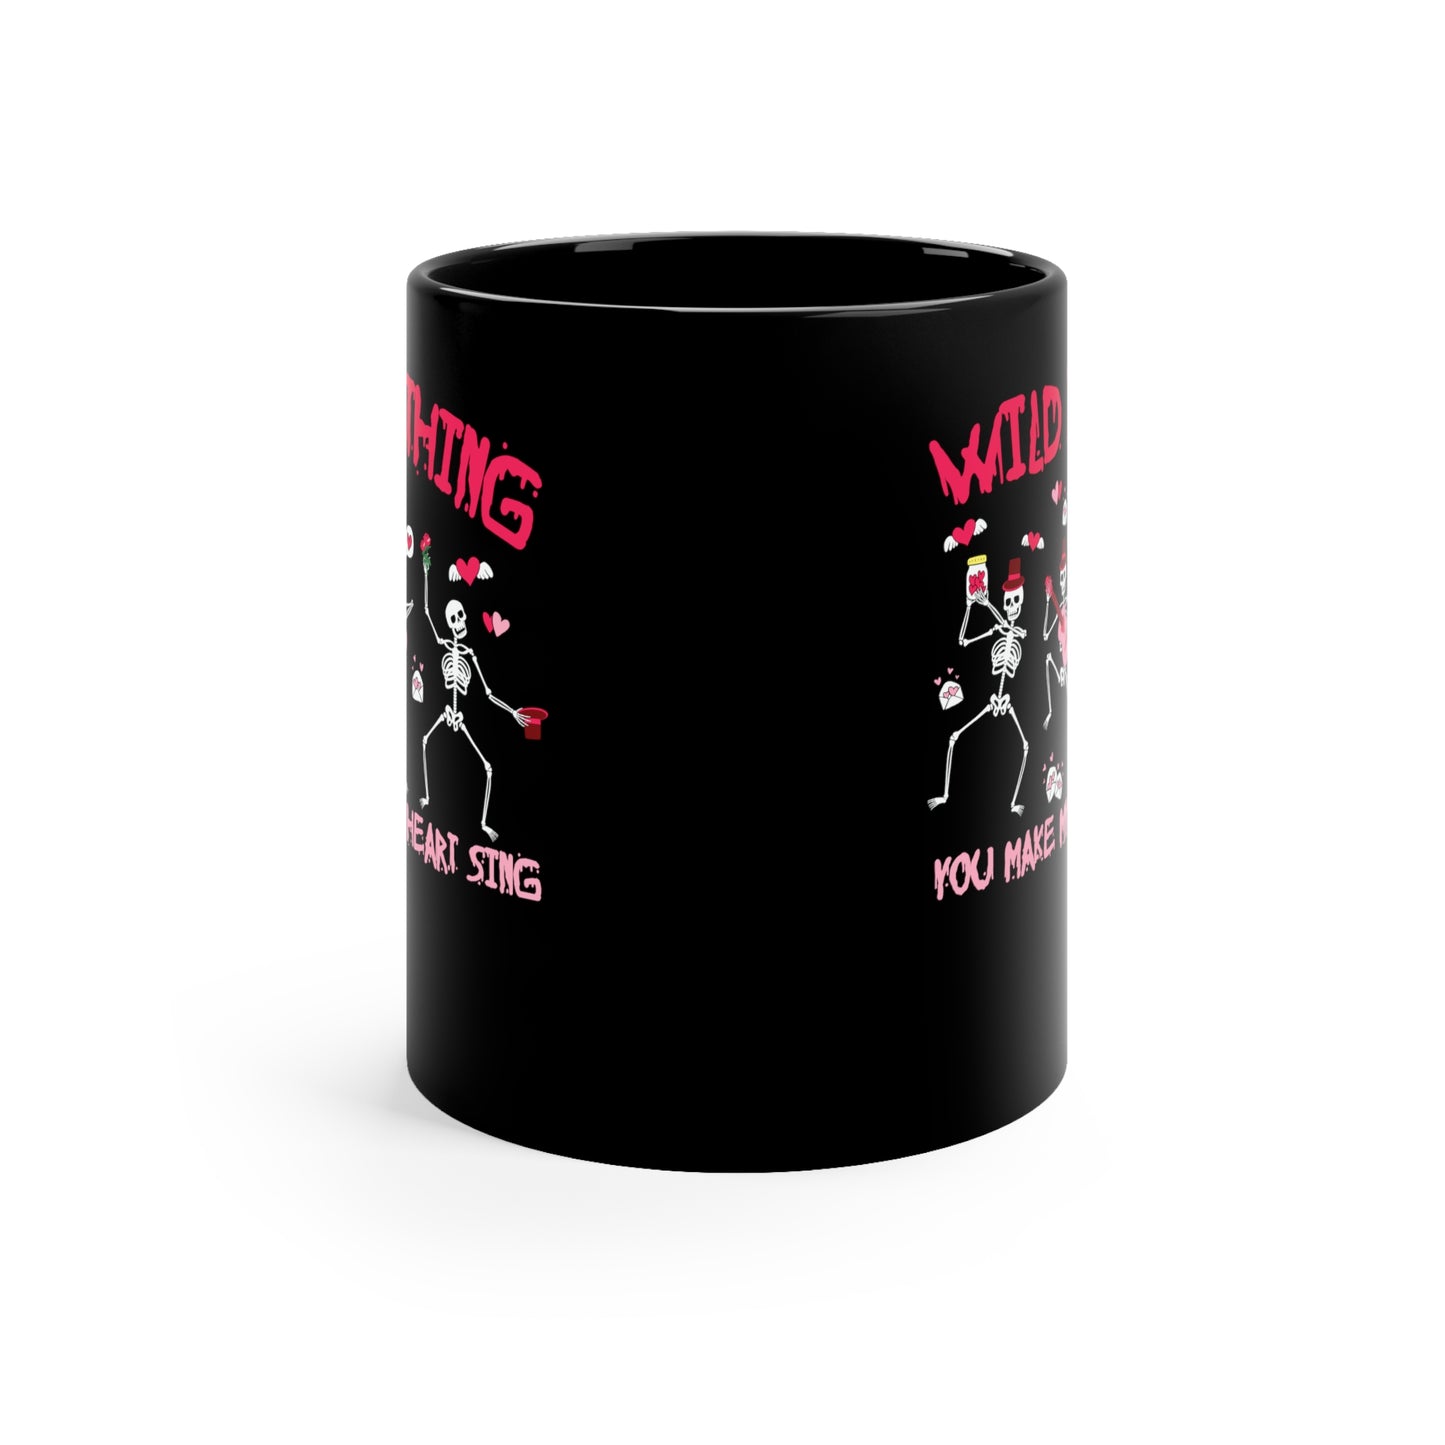 Dancing Valentine Skeletons Coffee Mug, Wild Thing, Funny Goth Valentine Cup